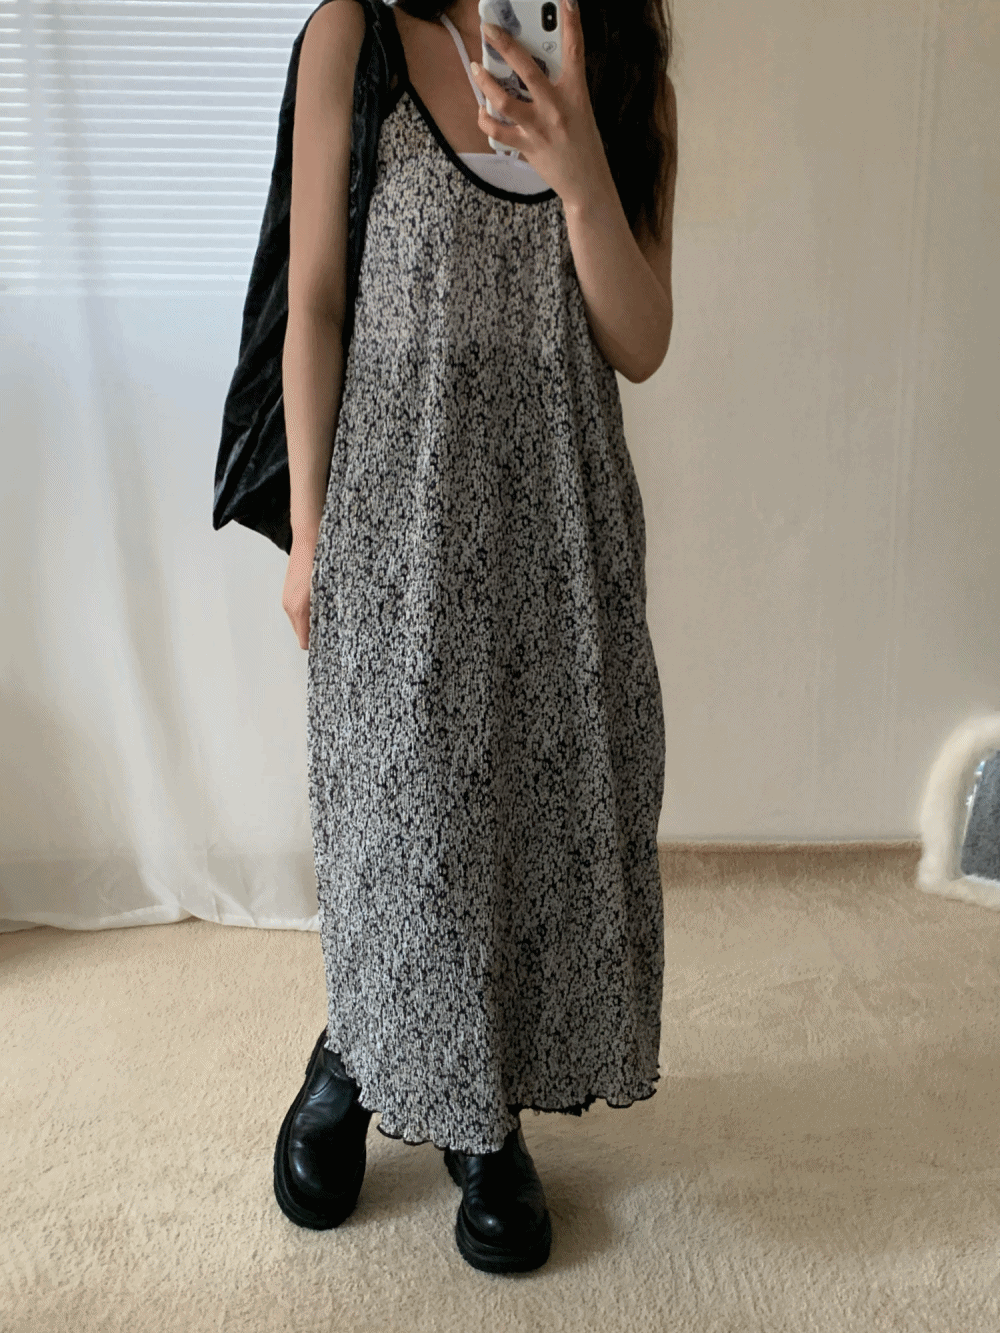 [Dress] Daisy wrinkle slip dress / 2 colors